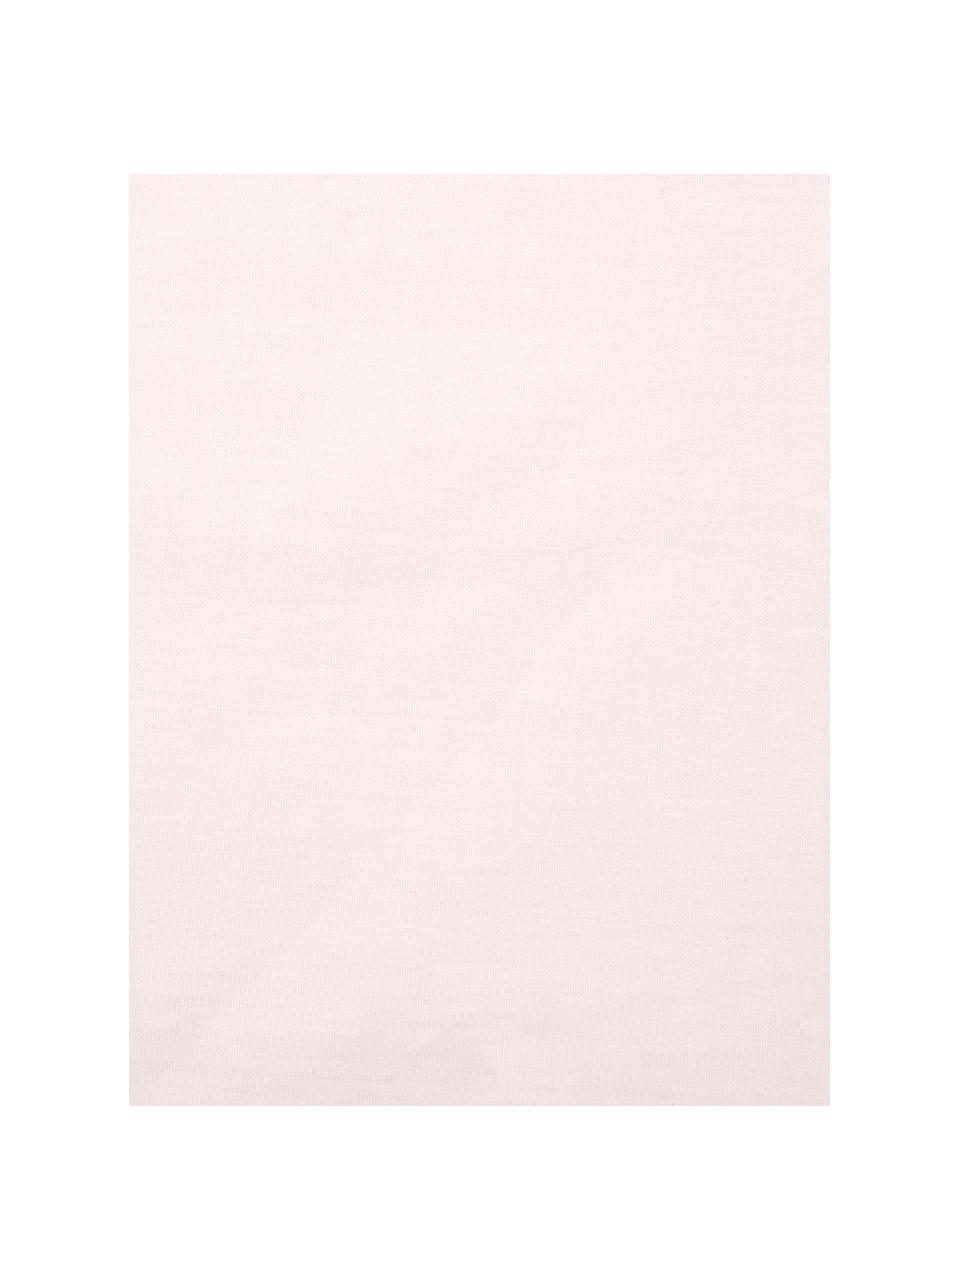 Baumwollperkal-Kissenbezug Malin mit Marmor-Muster, 65 x 100 cm, Webart: Renforcé Fadendichte 200 , Hellrosa, Mauve, B 65 x L 100 cm